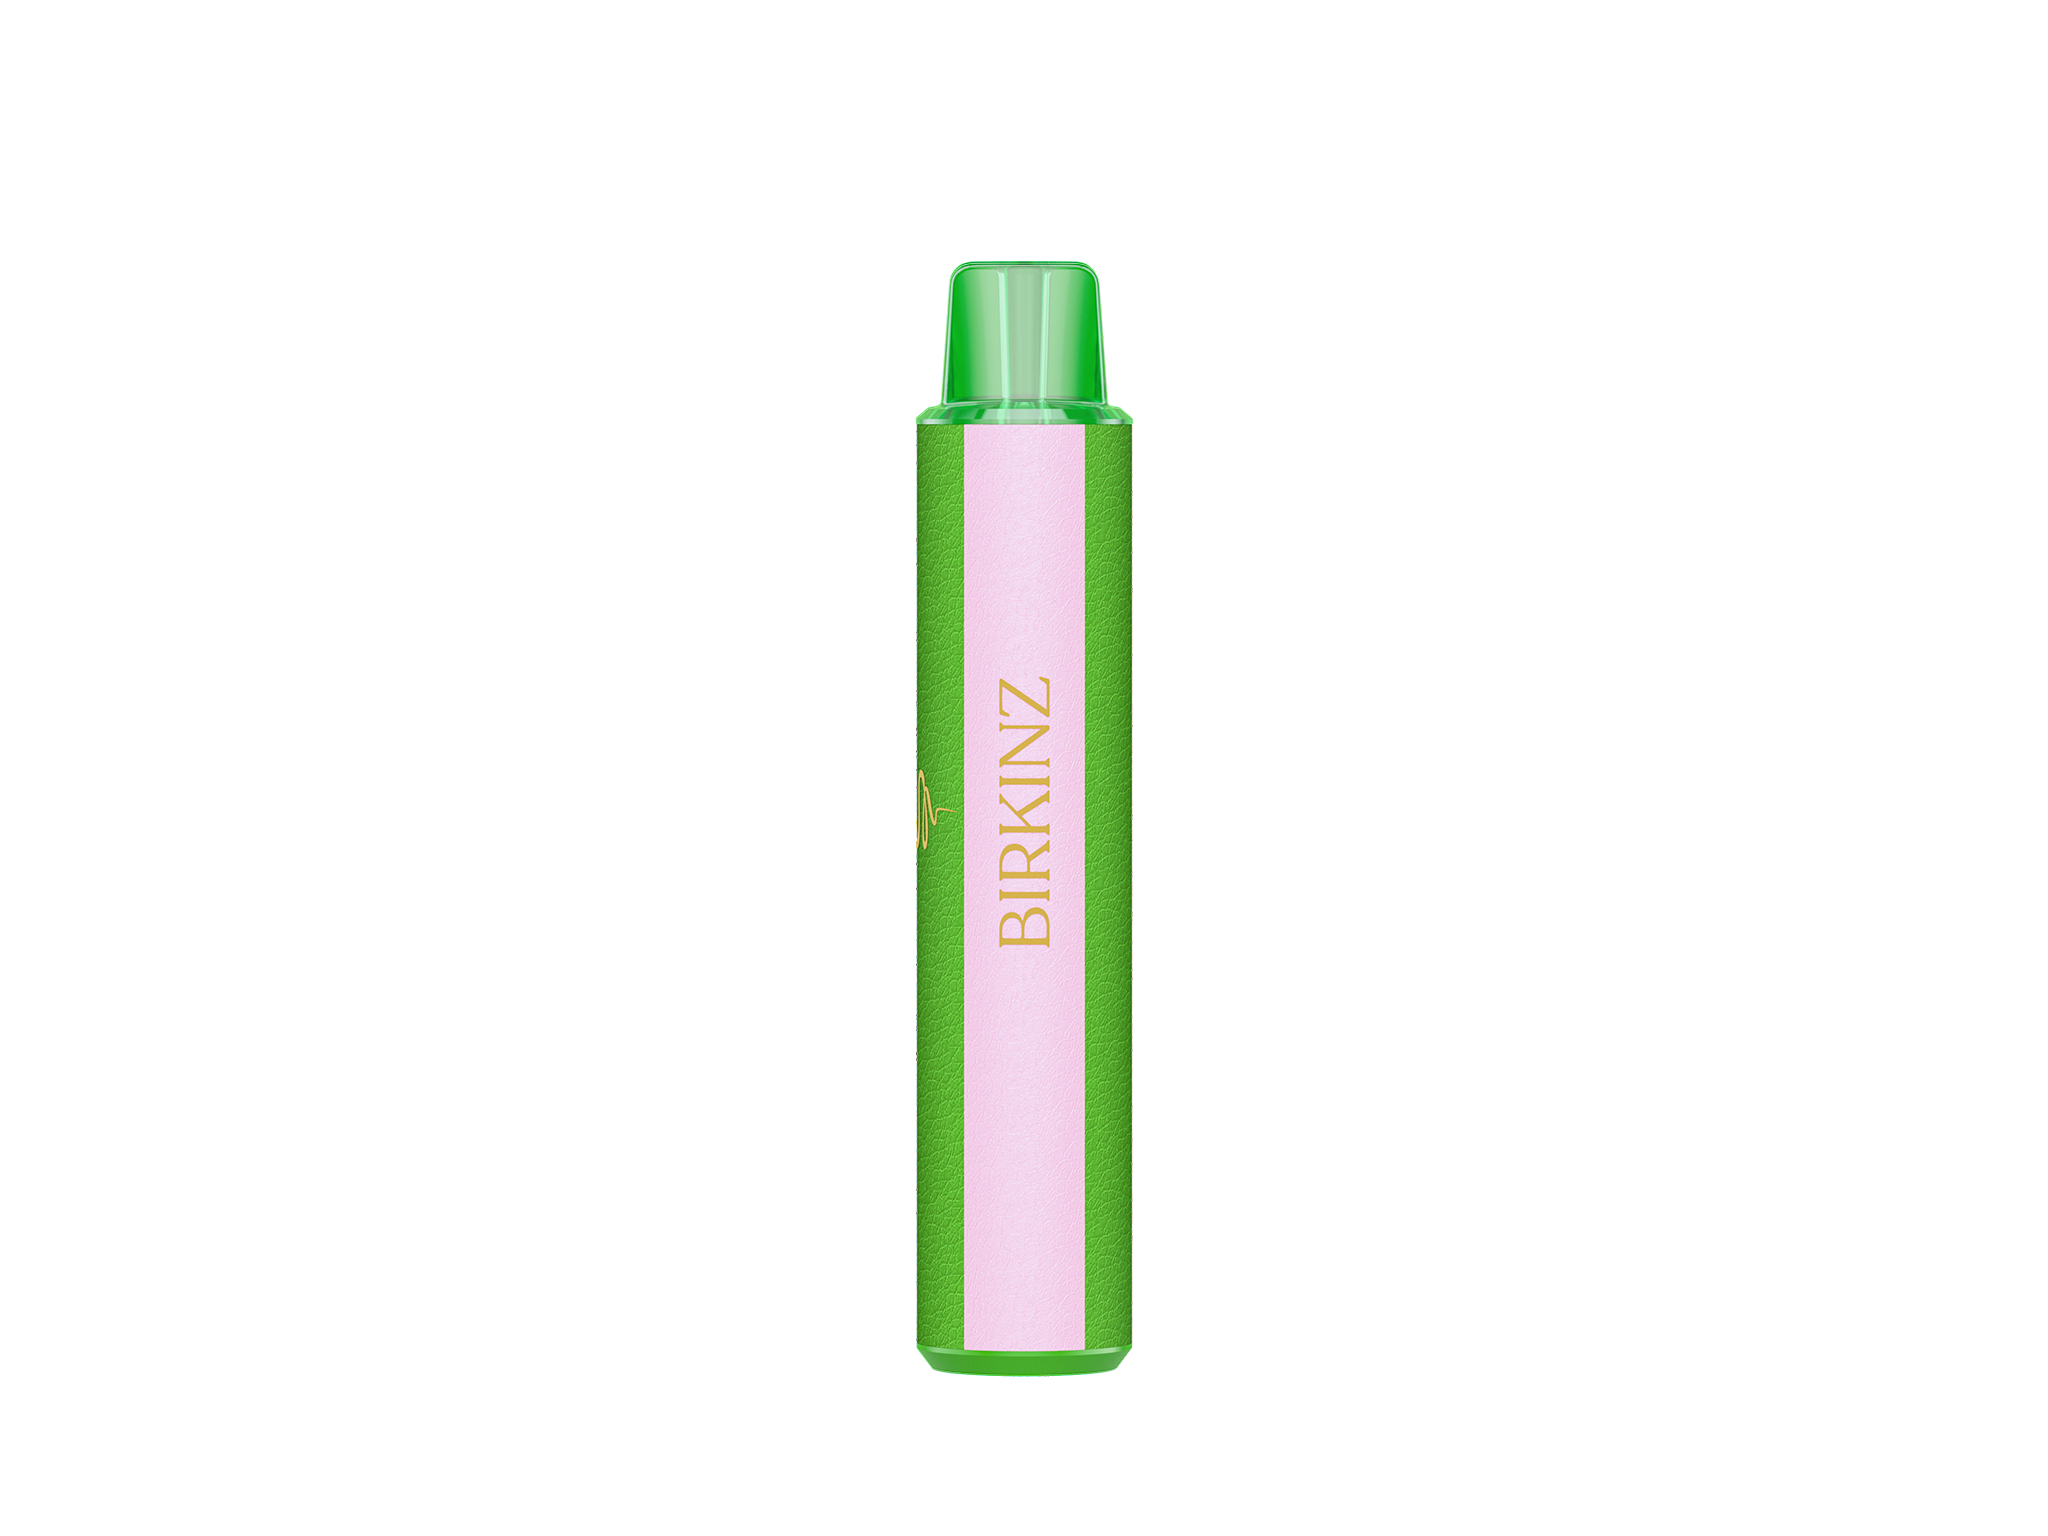 BIRKINZ | 3000 Puff | 0% Nicotine | Energy Drink